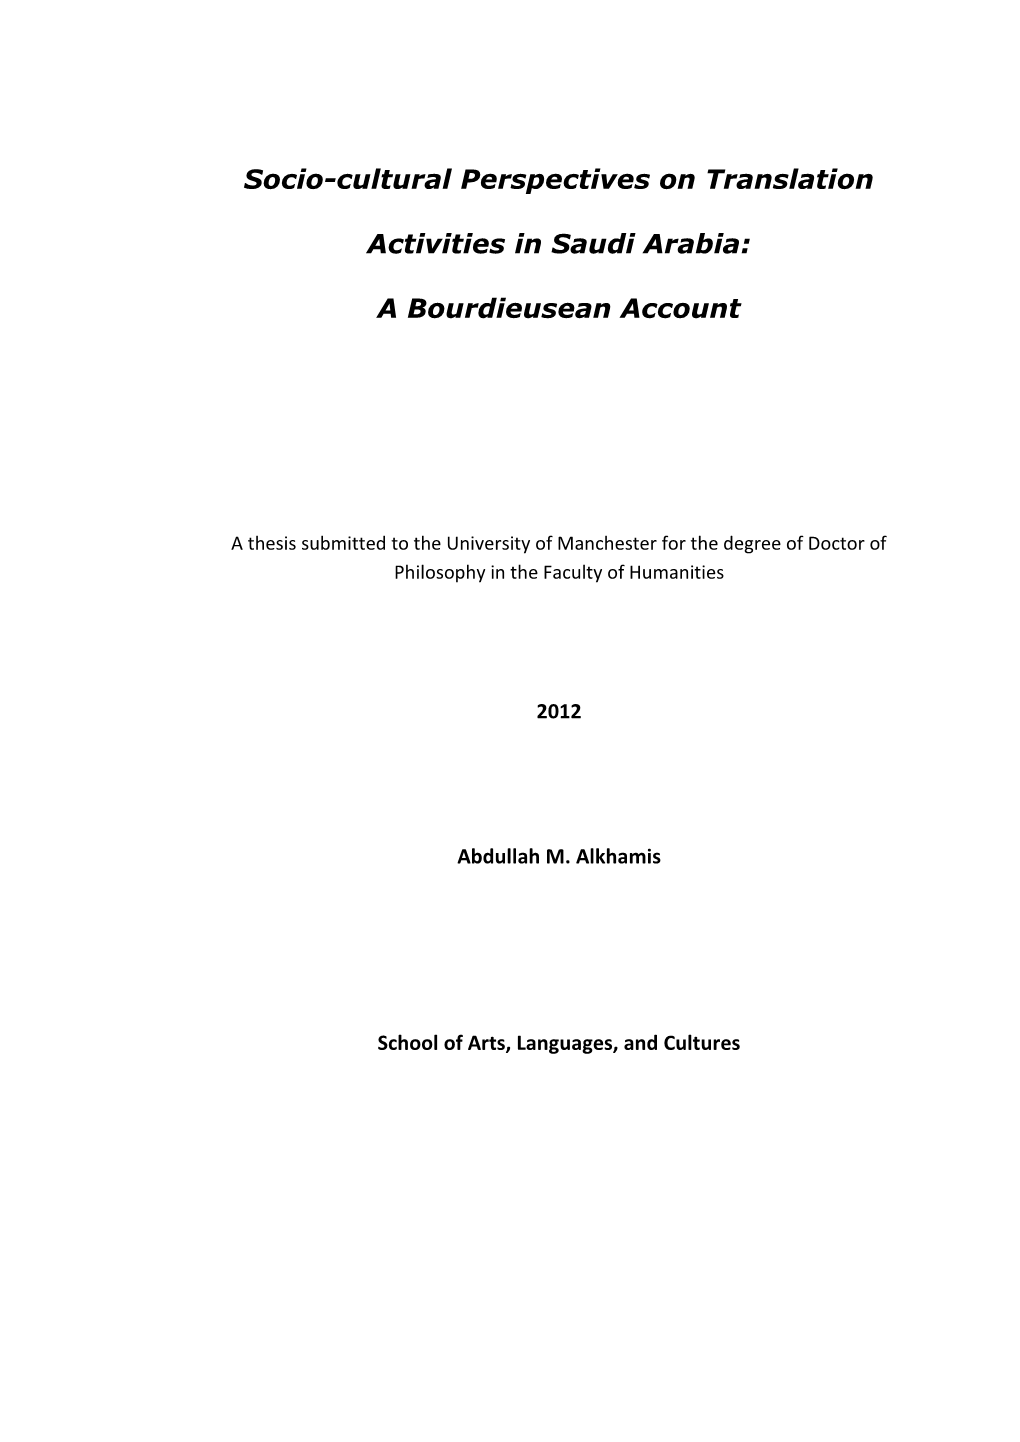 Socio-Cultural Perspectives on Translation Activities in Saudi Arabia